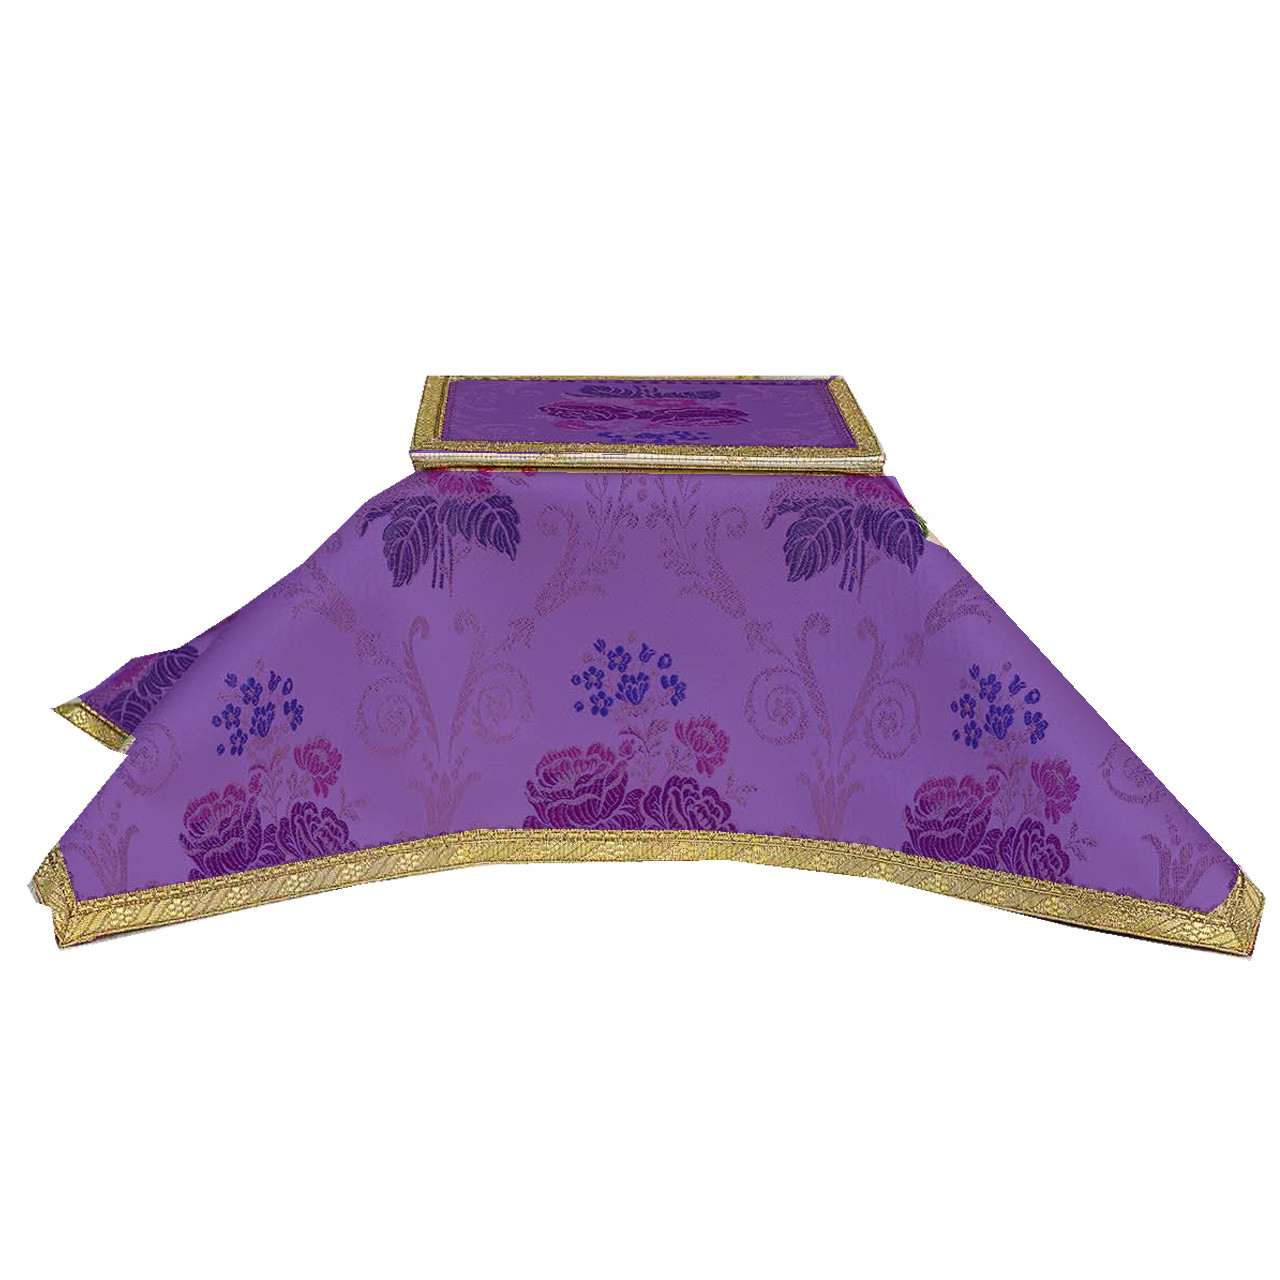 103 Burse and Veil from Arte-Houssard Purple